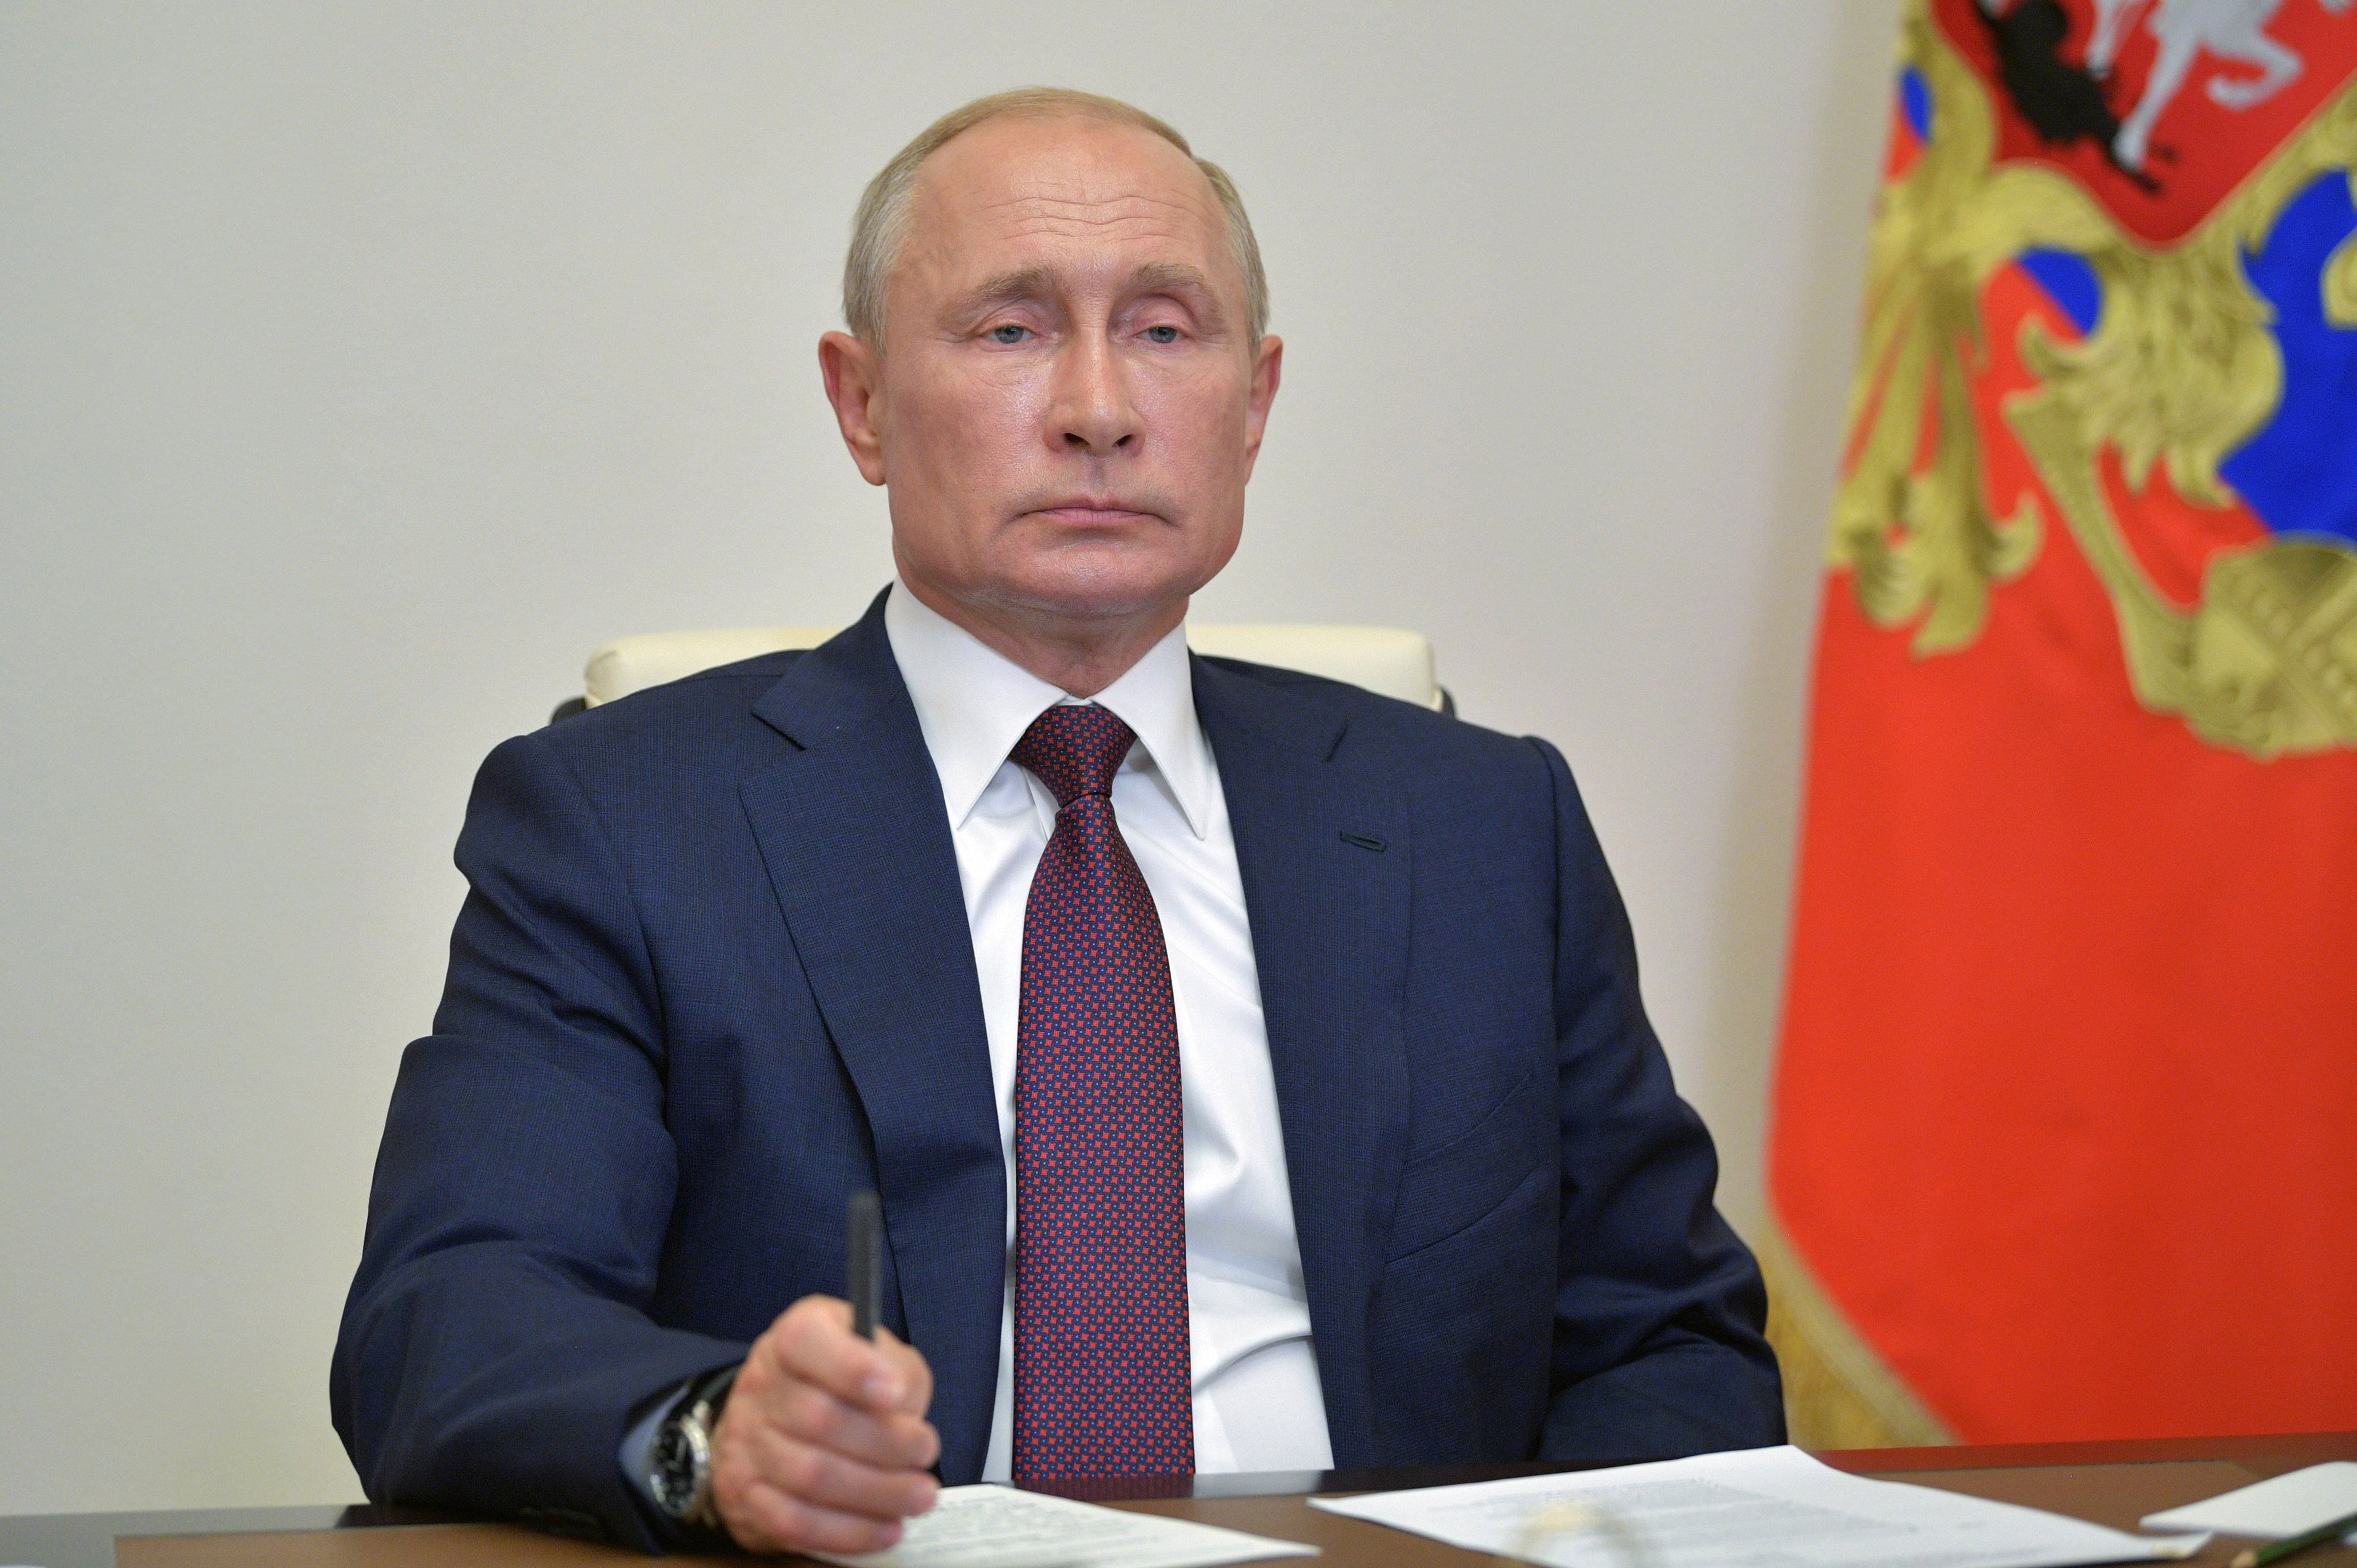 Kremlin critics denounced the results of the plebiscite. Credit: AP Photo